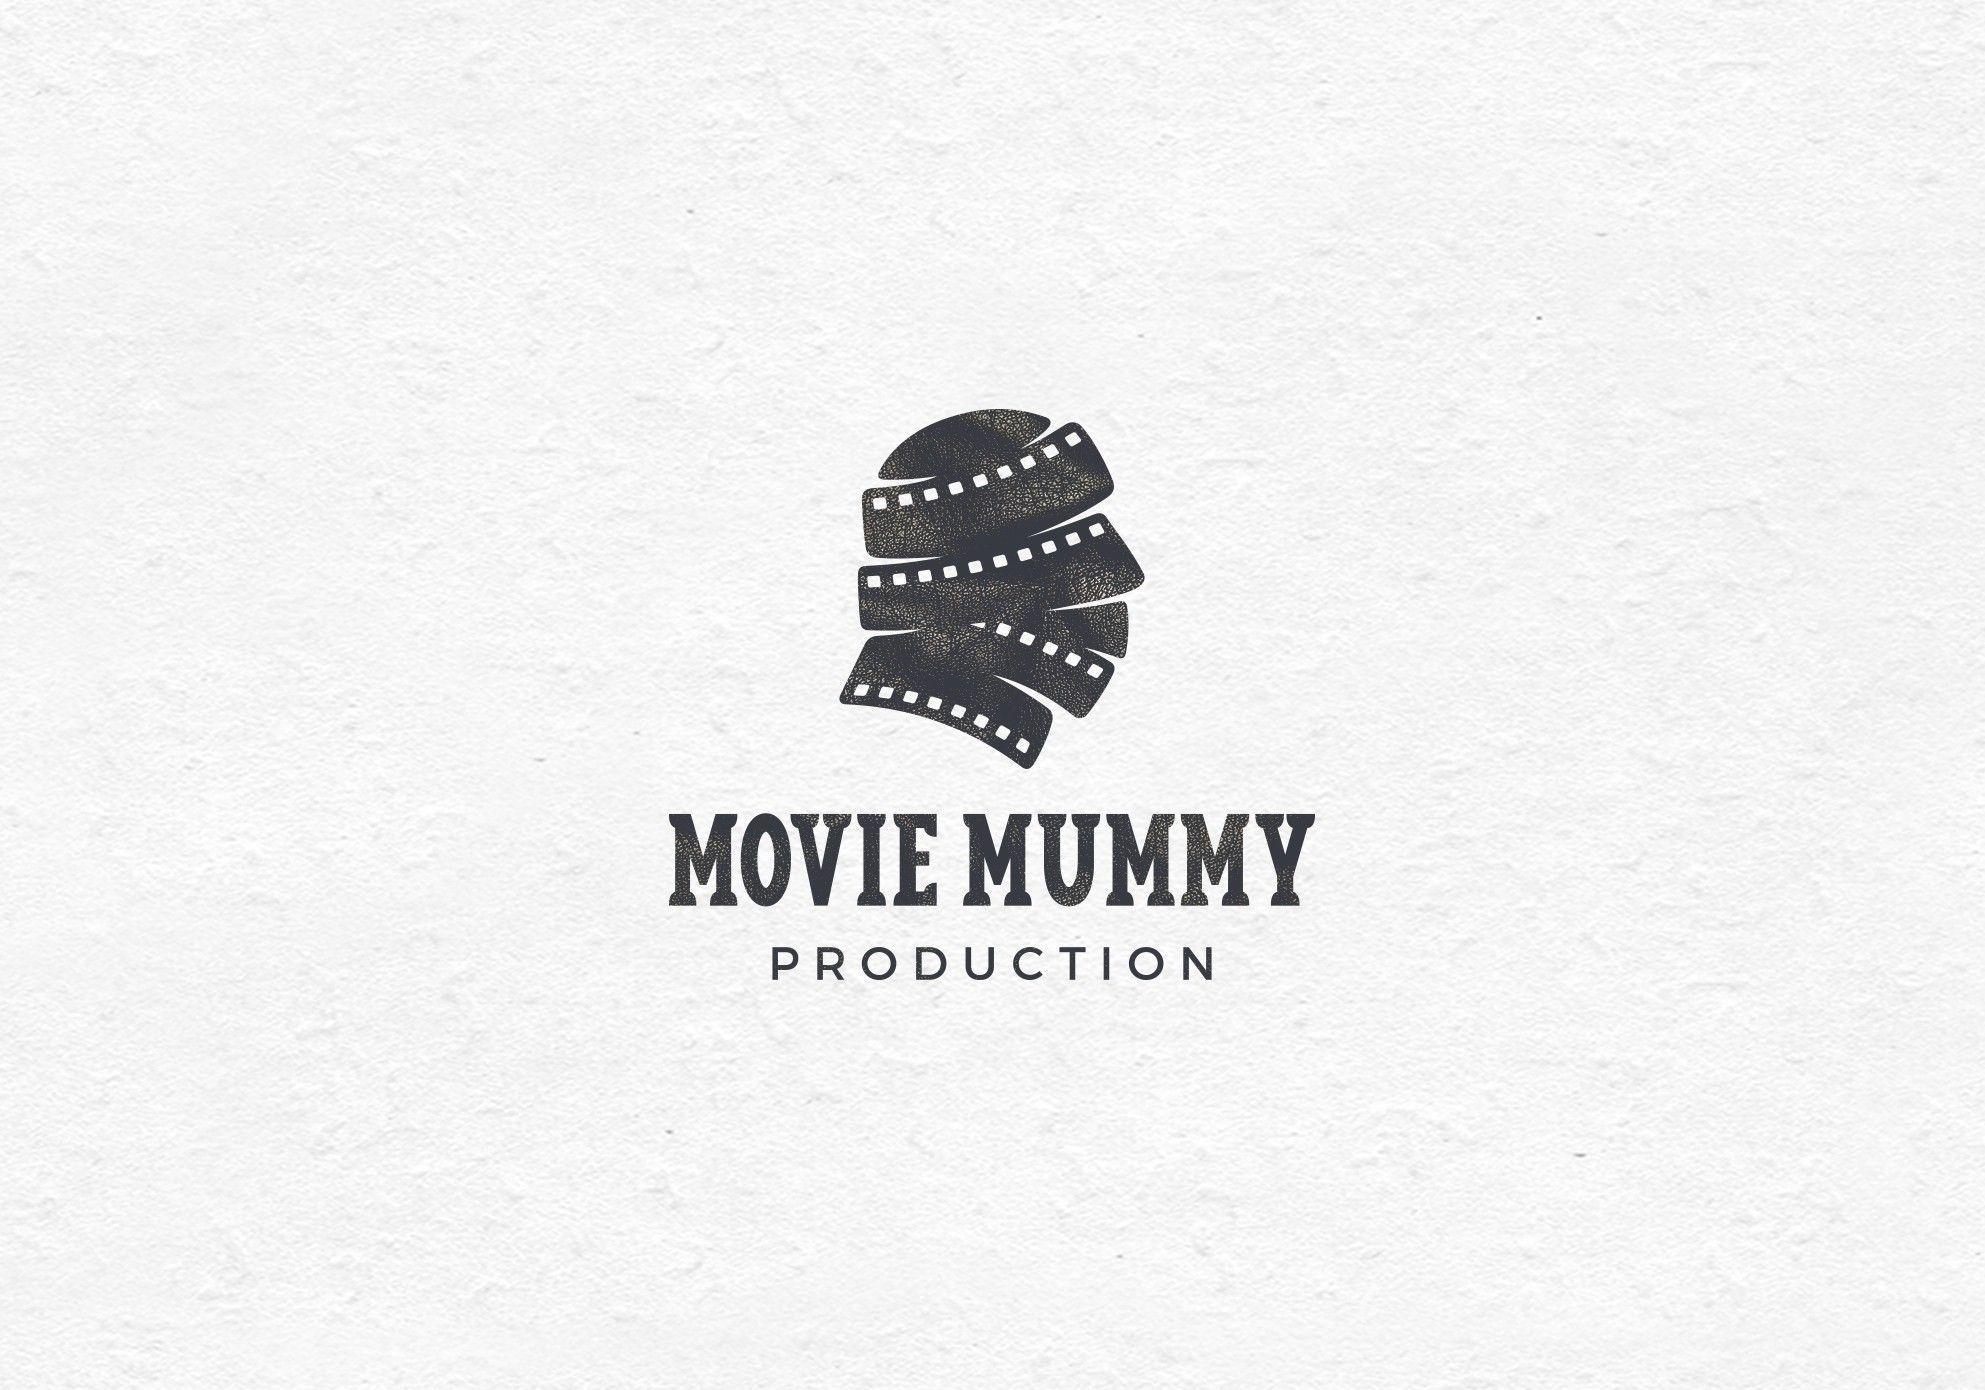 Mummy Movie Logo - Logo design by Sava Stoic for Movie Mummy, a media production ...